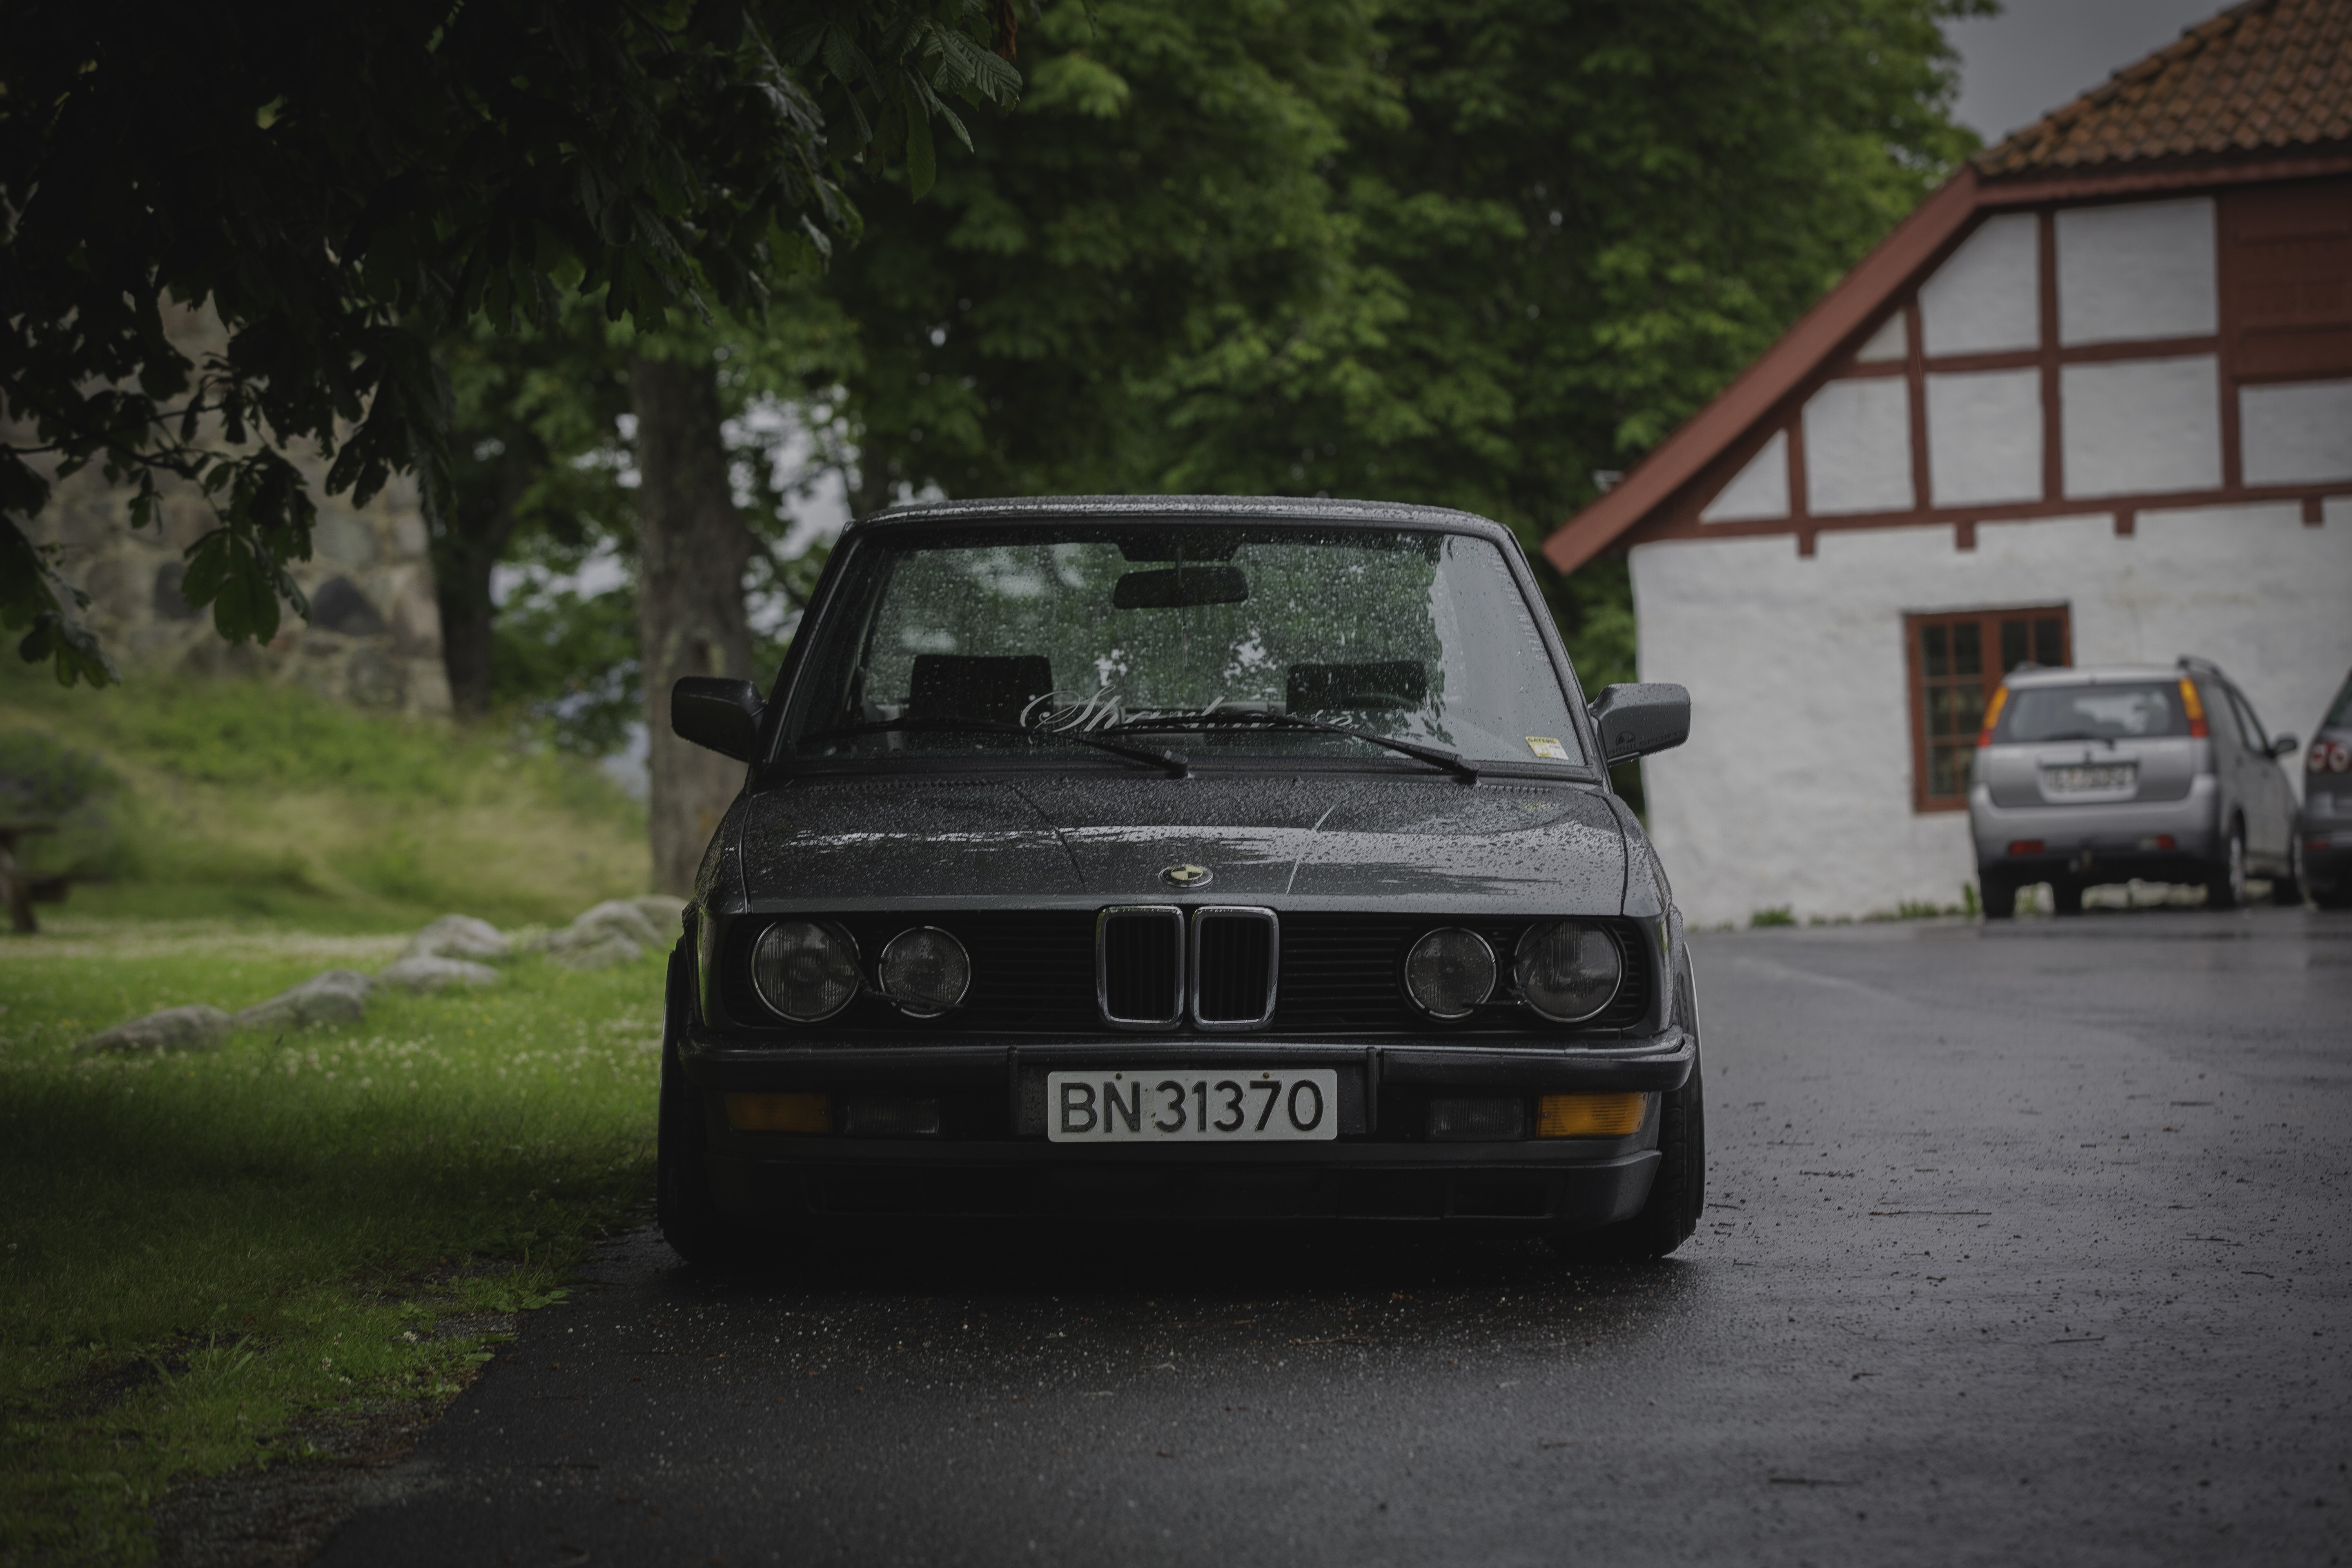 BMW E28, Stance, Stanceworks, Savethewheels, Static, Norway, Summer, Rain Wallpaper